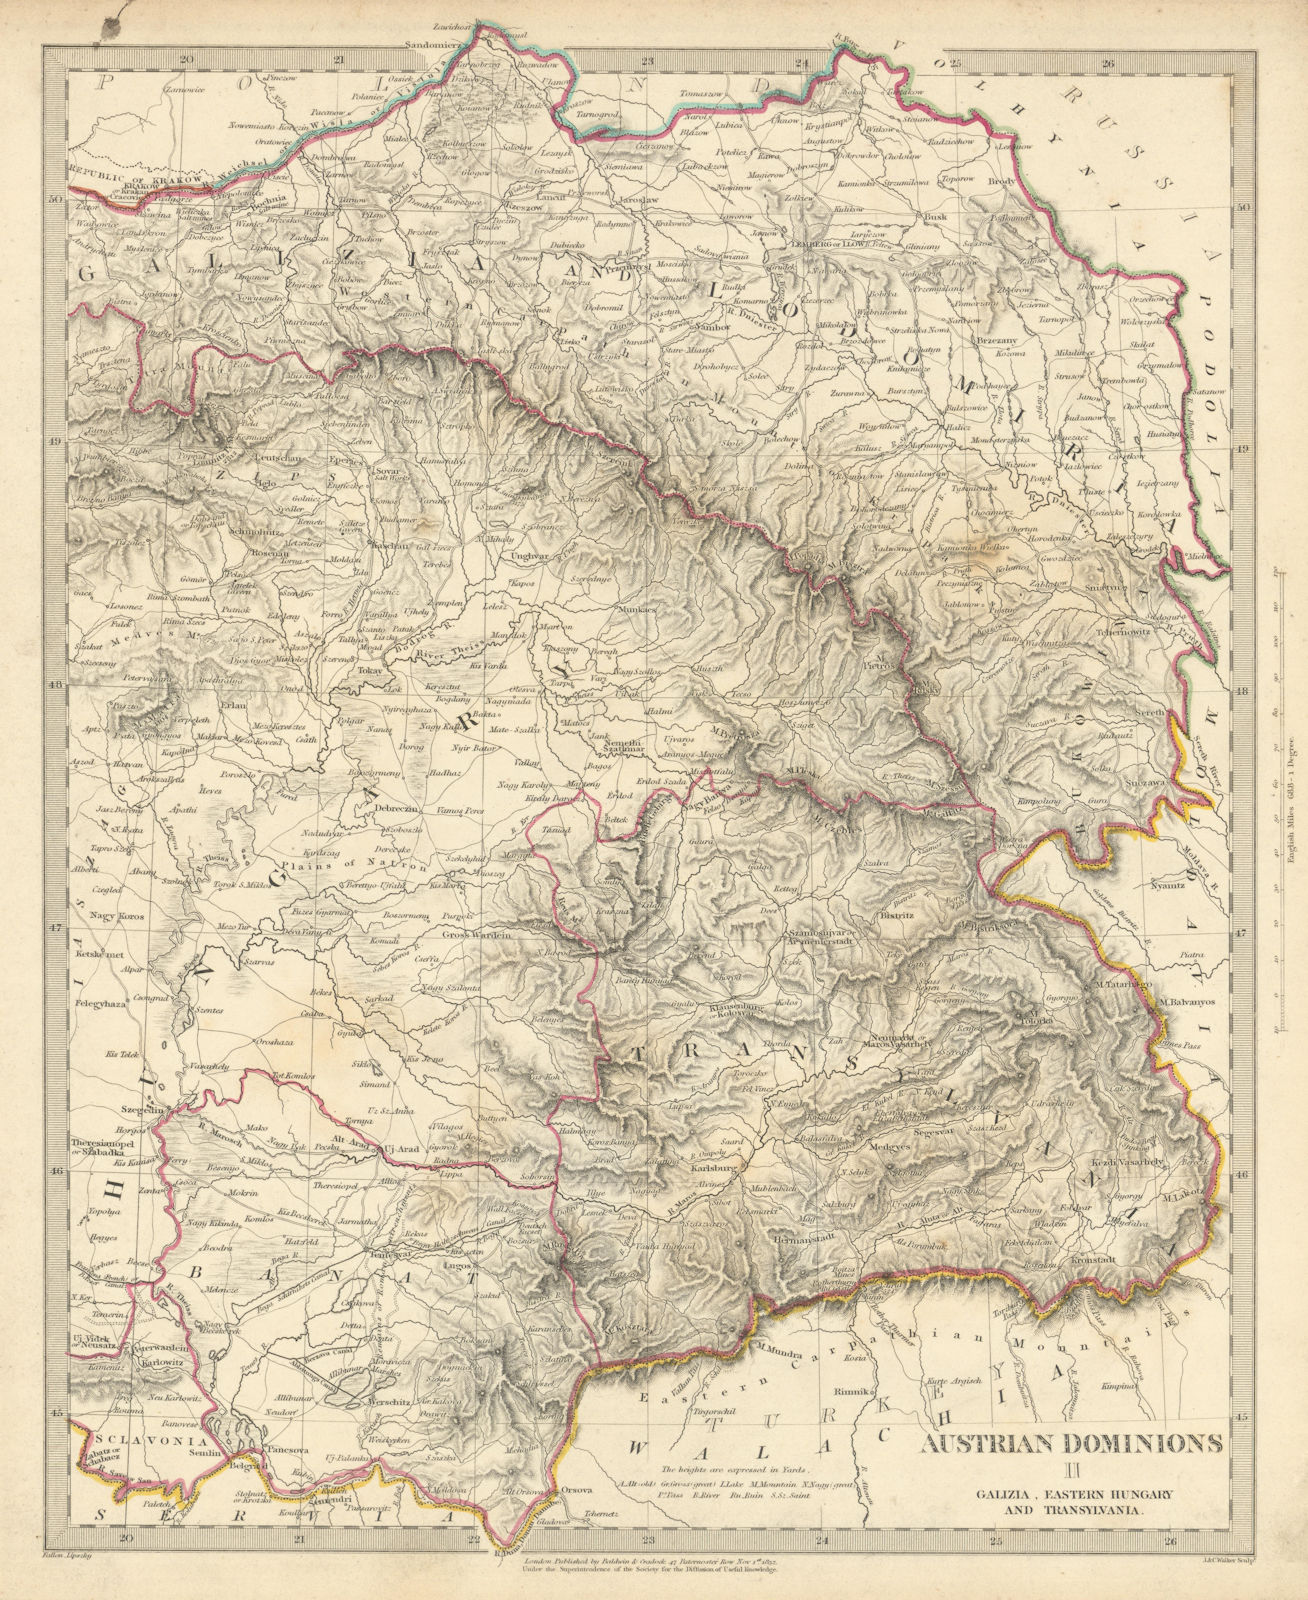 Associate Product AUSTRIAN DOMINIONS.Galizia Eastern Hungary Transylvania Galicia.SDUK 1844 map